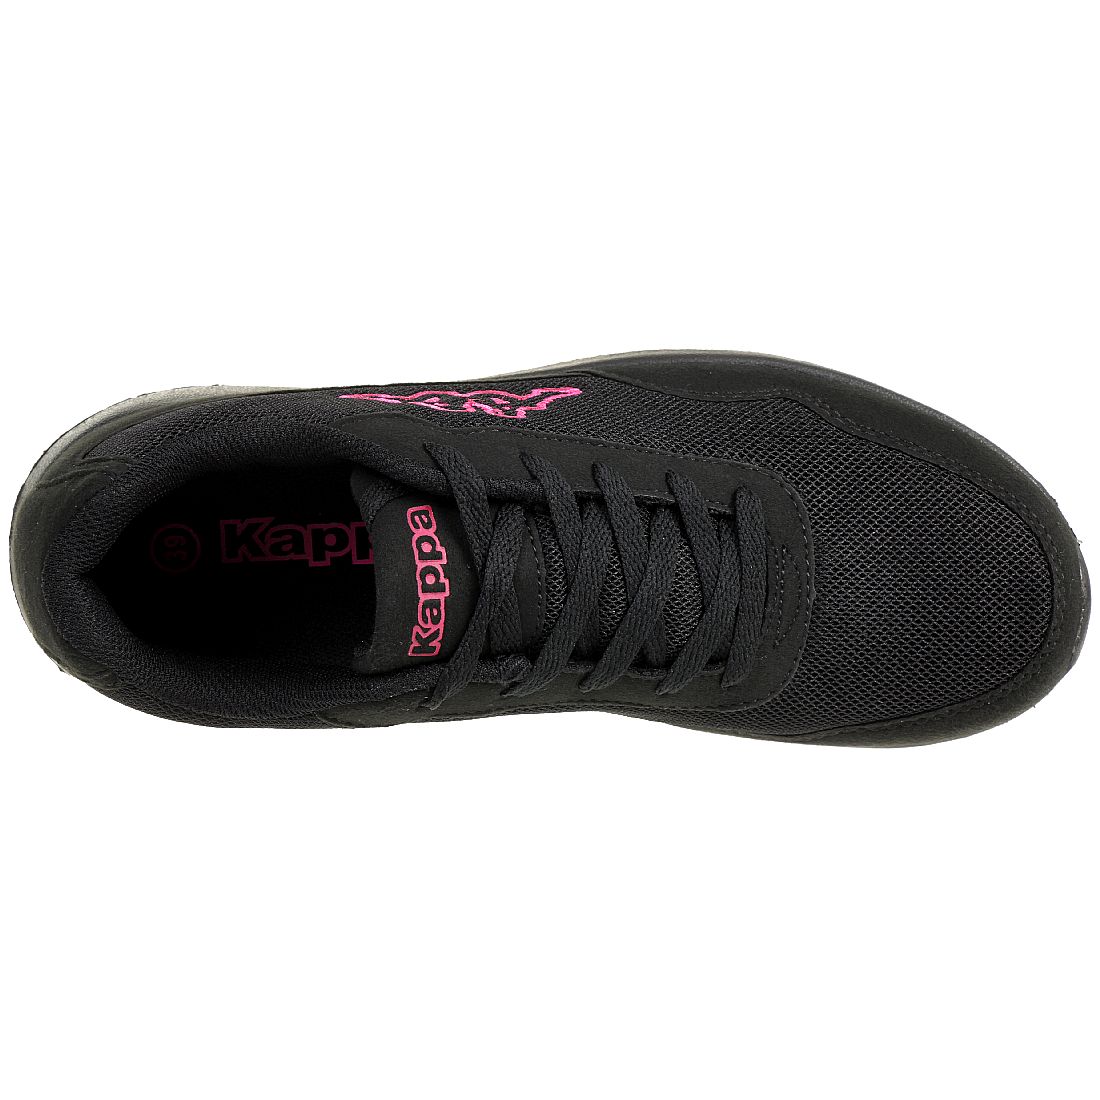 Kappa Damen Mädchen Sneaker Follow black/pink